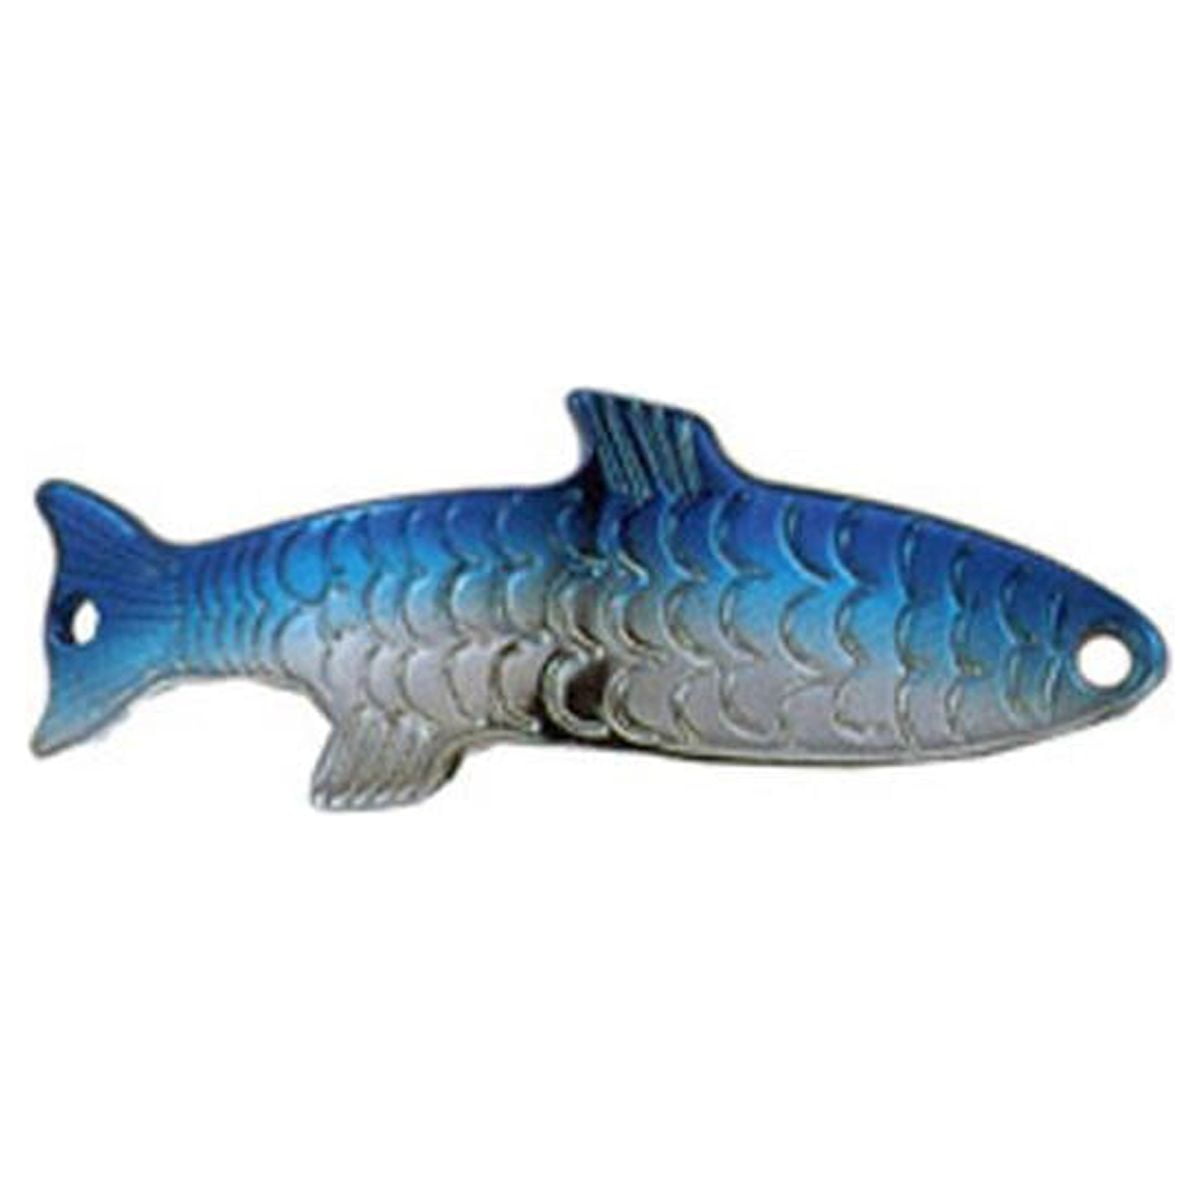 Acme S304 Phoebe Spoon, 2, 1/4 oz, Silver & Neon Blue - FISH307